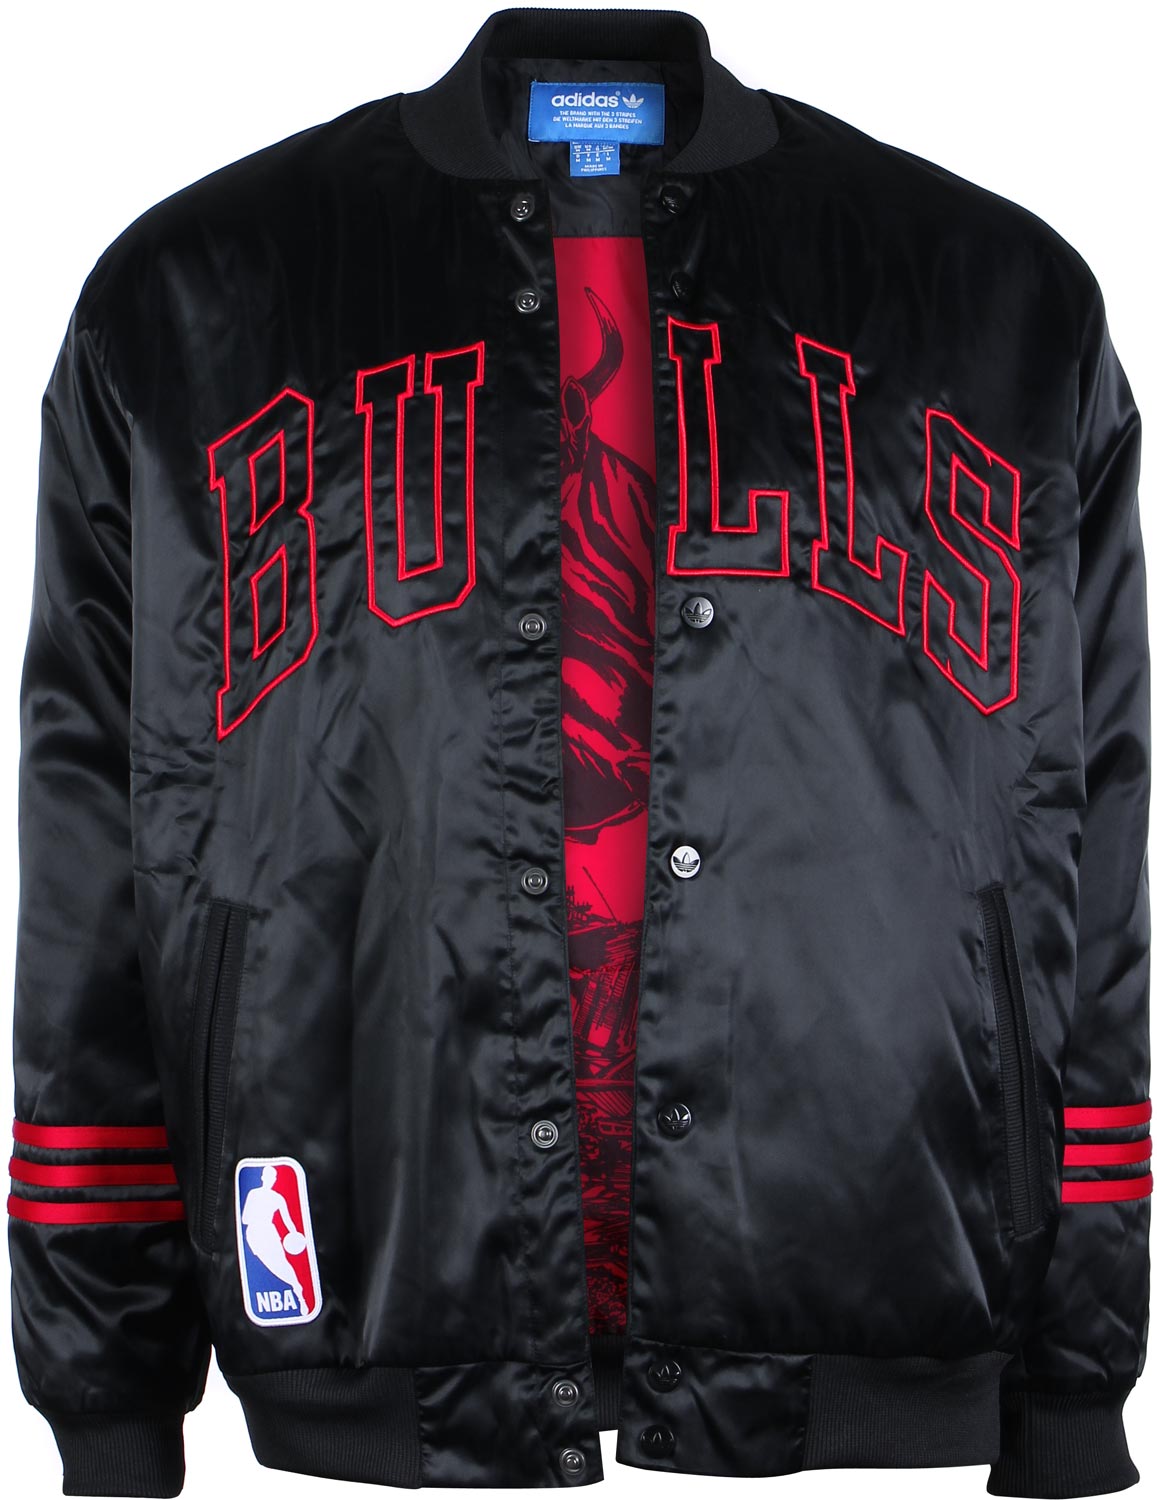 Adidas Chicago Bulls chaqueata NBA baskbásquetbol negro satin senor S/M/L/XL/XXL camiseta comprar tienda online shop - spieler-trikot.de futbol camiseta maglia maillot tricot online shop